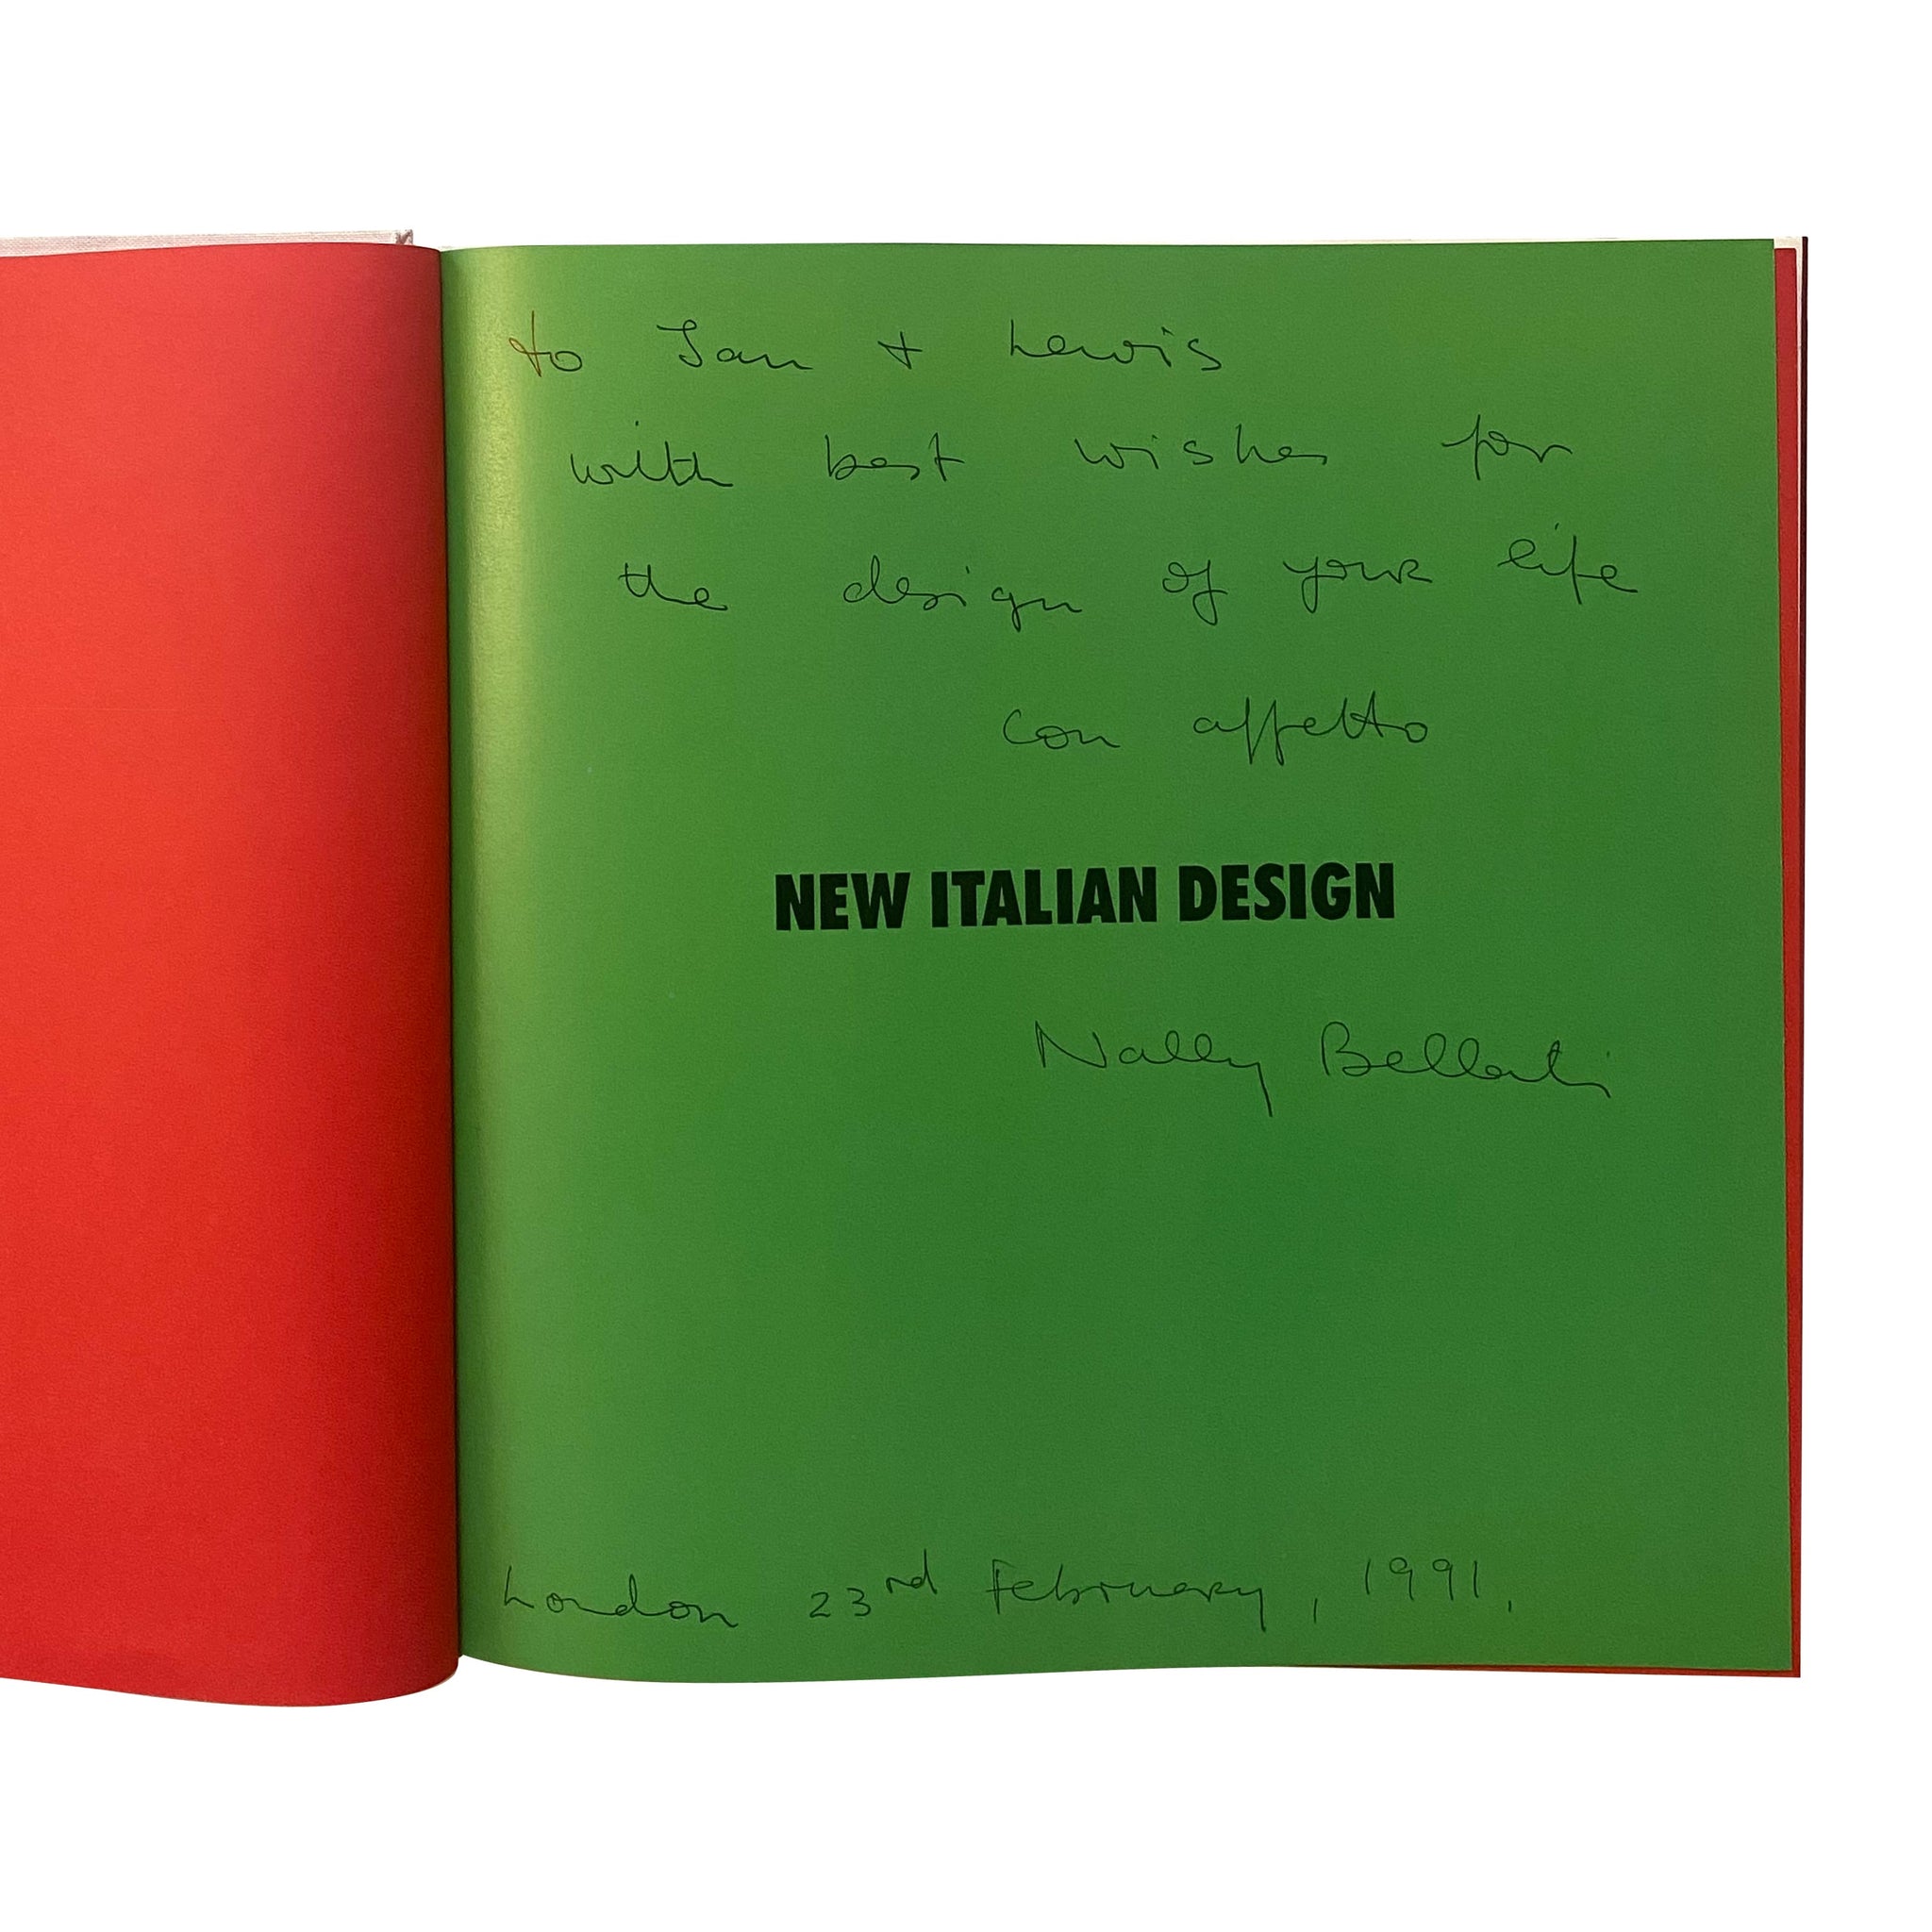 New Italian Design - Nally Bellati, Rizzoli Publishing. Rare 1st Edition.